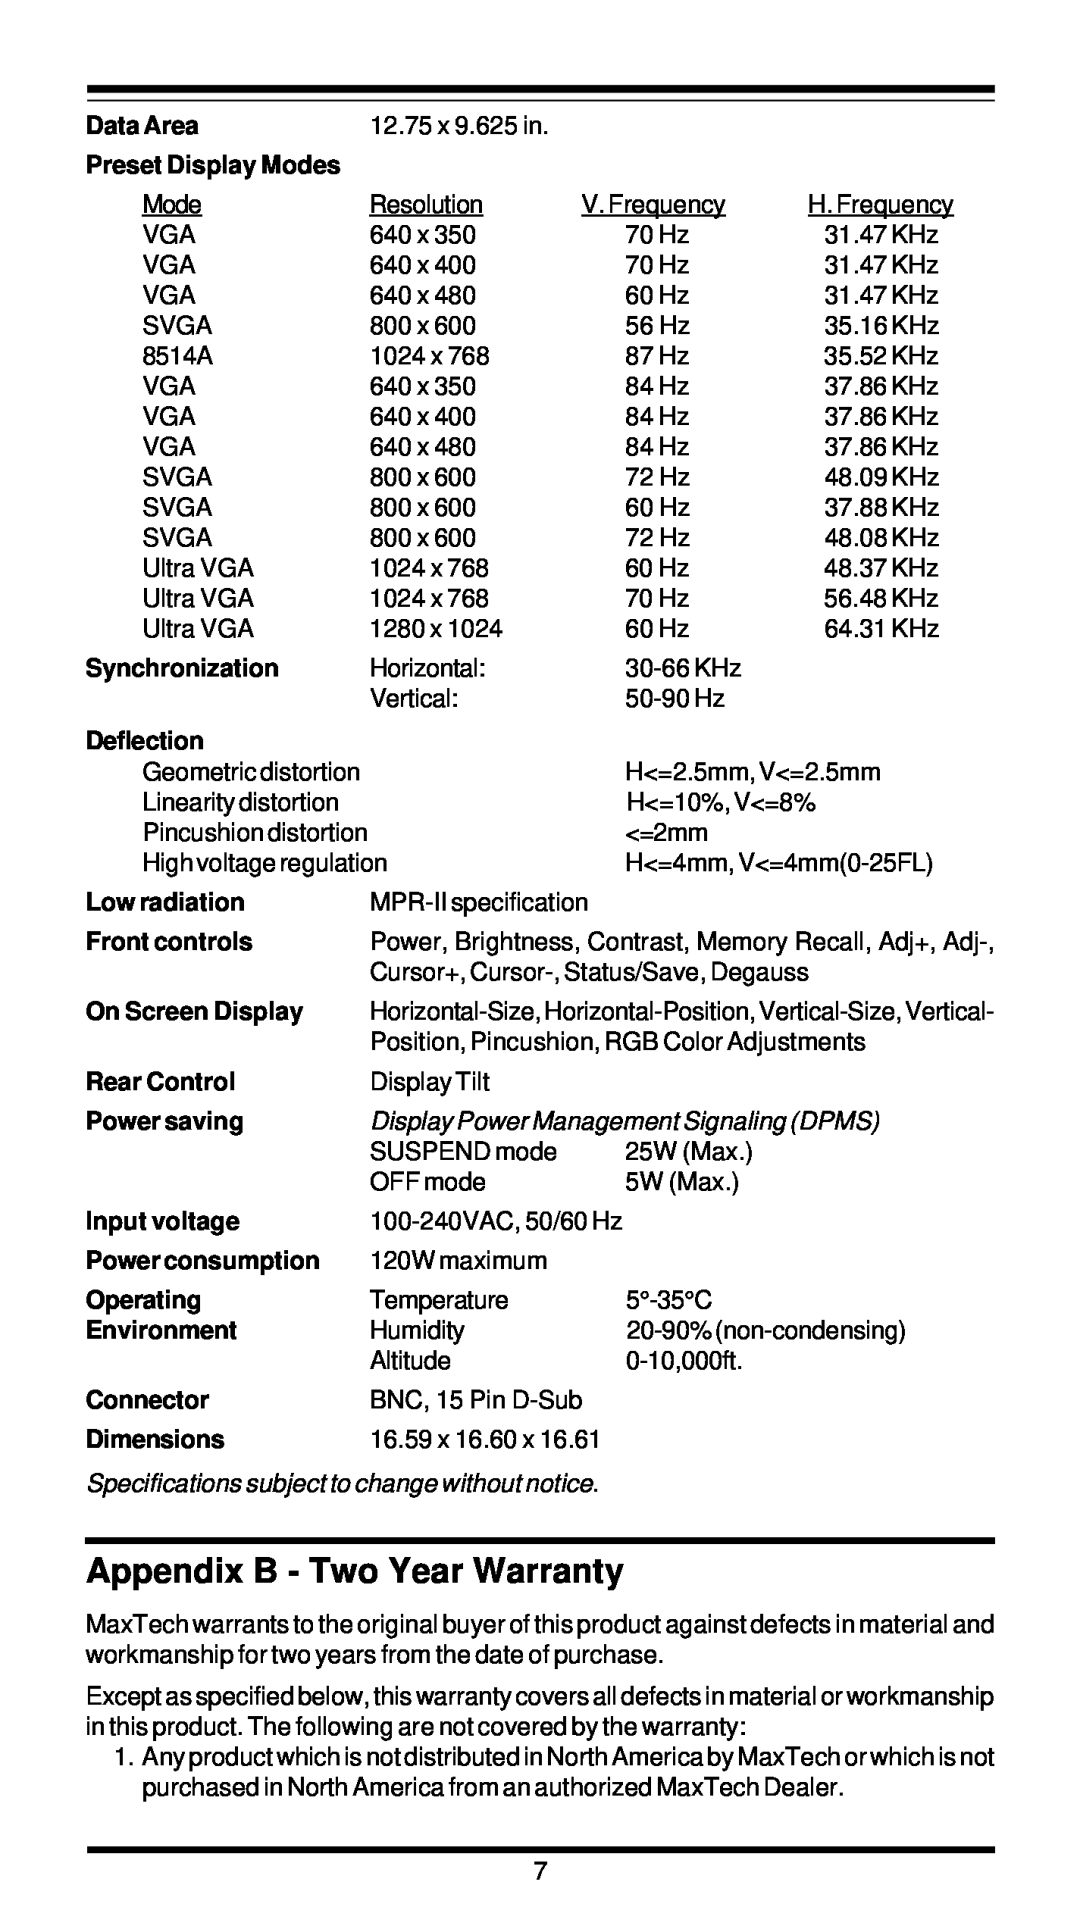 MaxTech XT7800 user manual Appendix B - Two Year Warranty, Display Power Management Signaling DPMS 